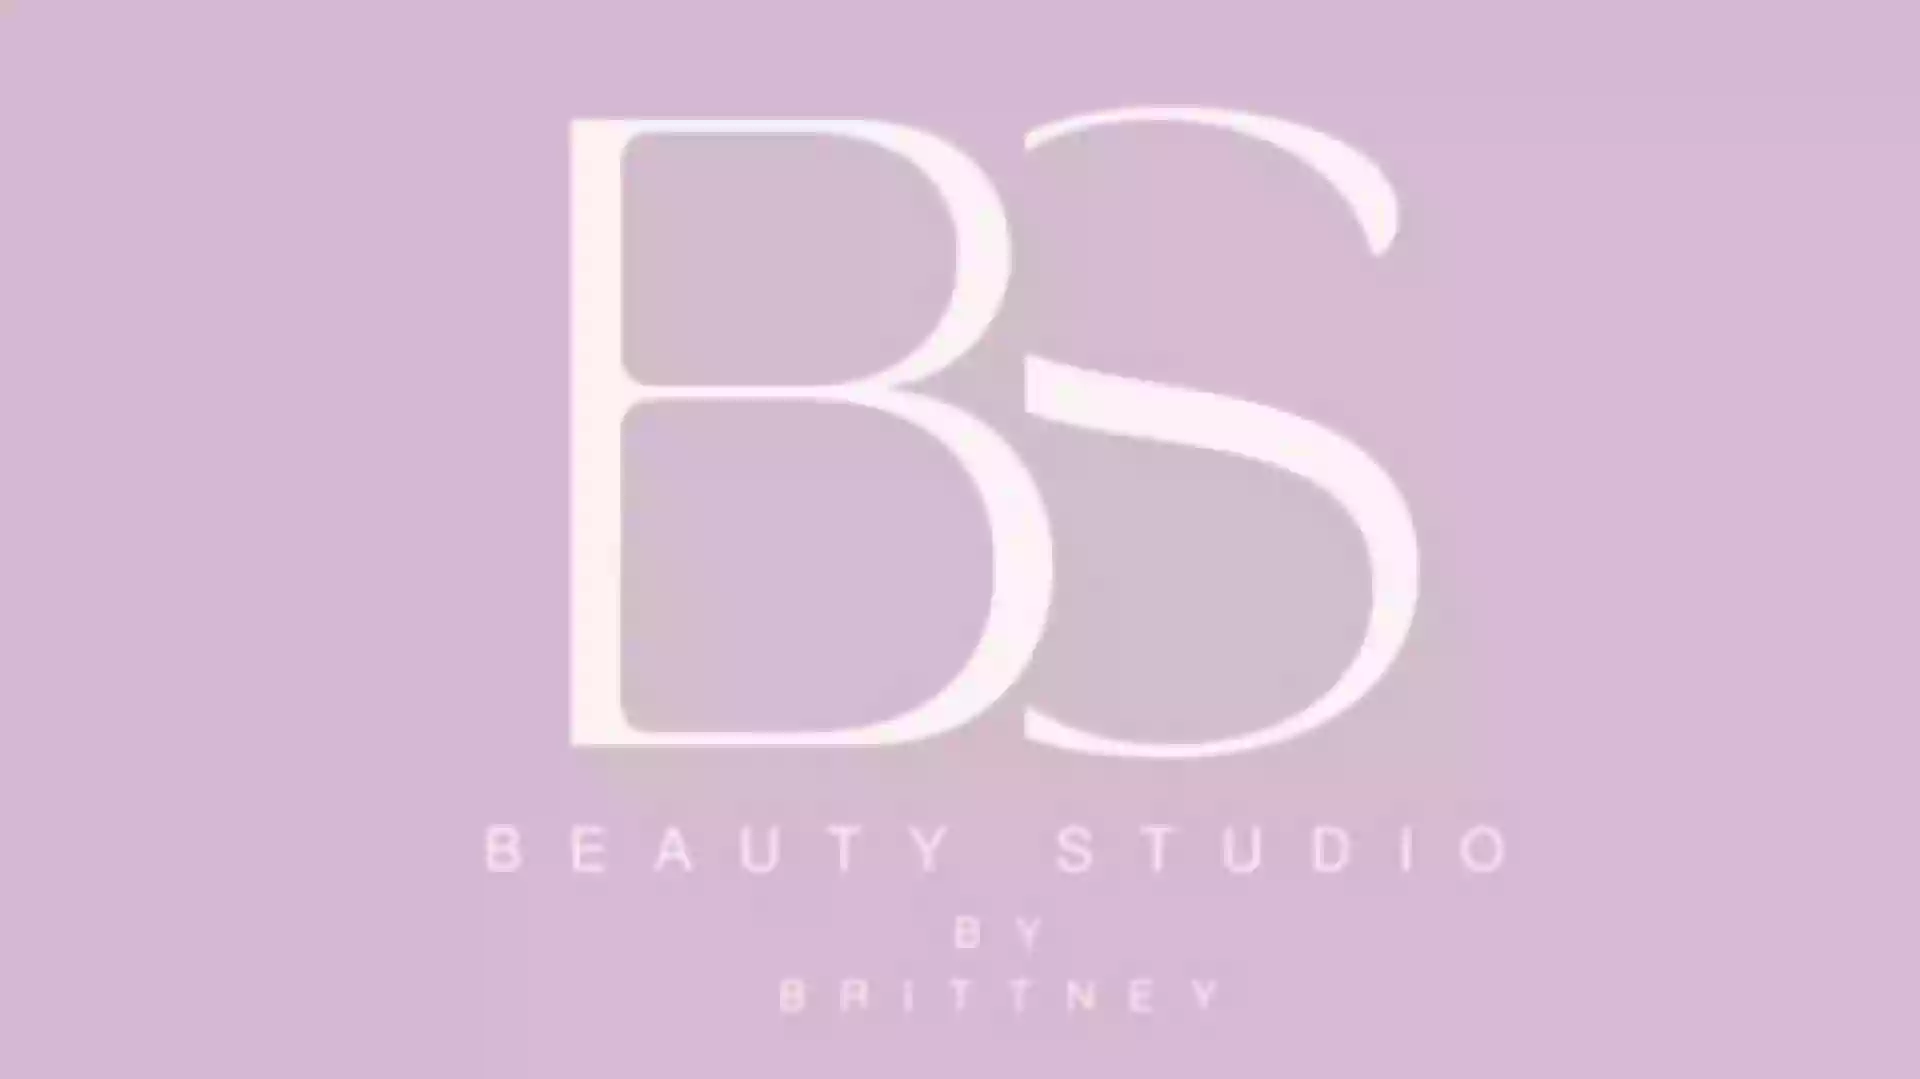 Beauty Studio by Brittney, L.L.C.